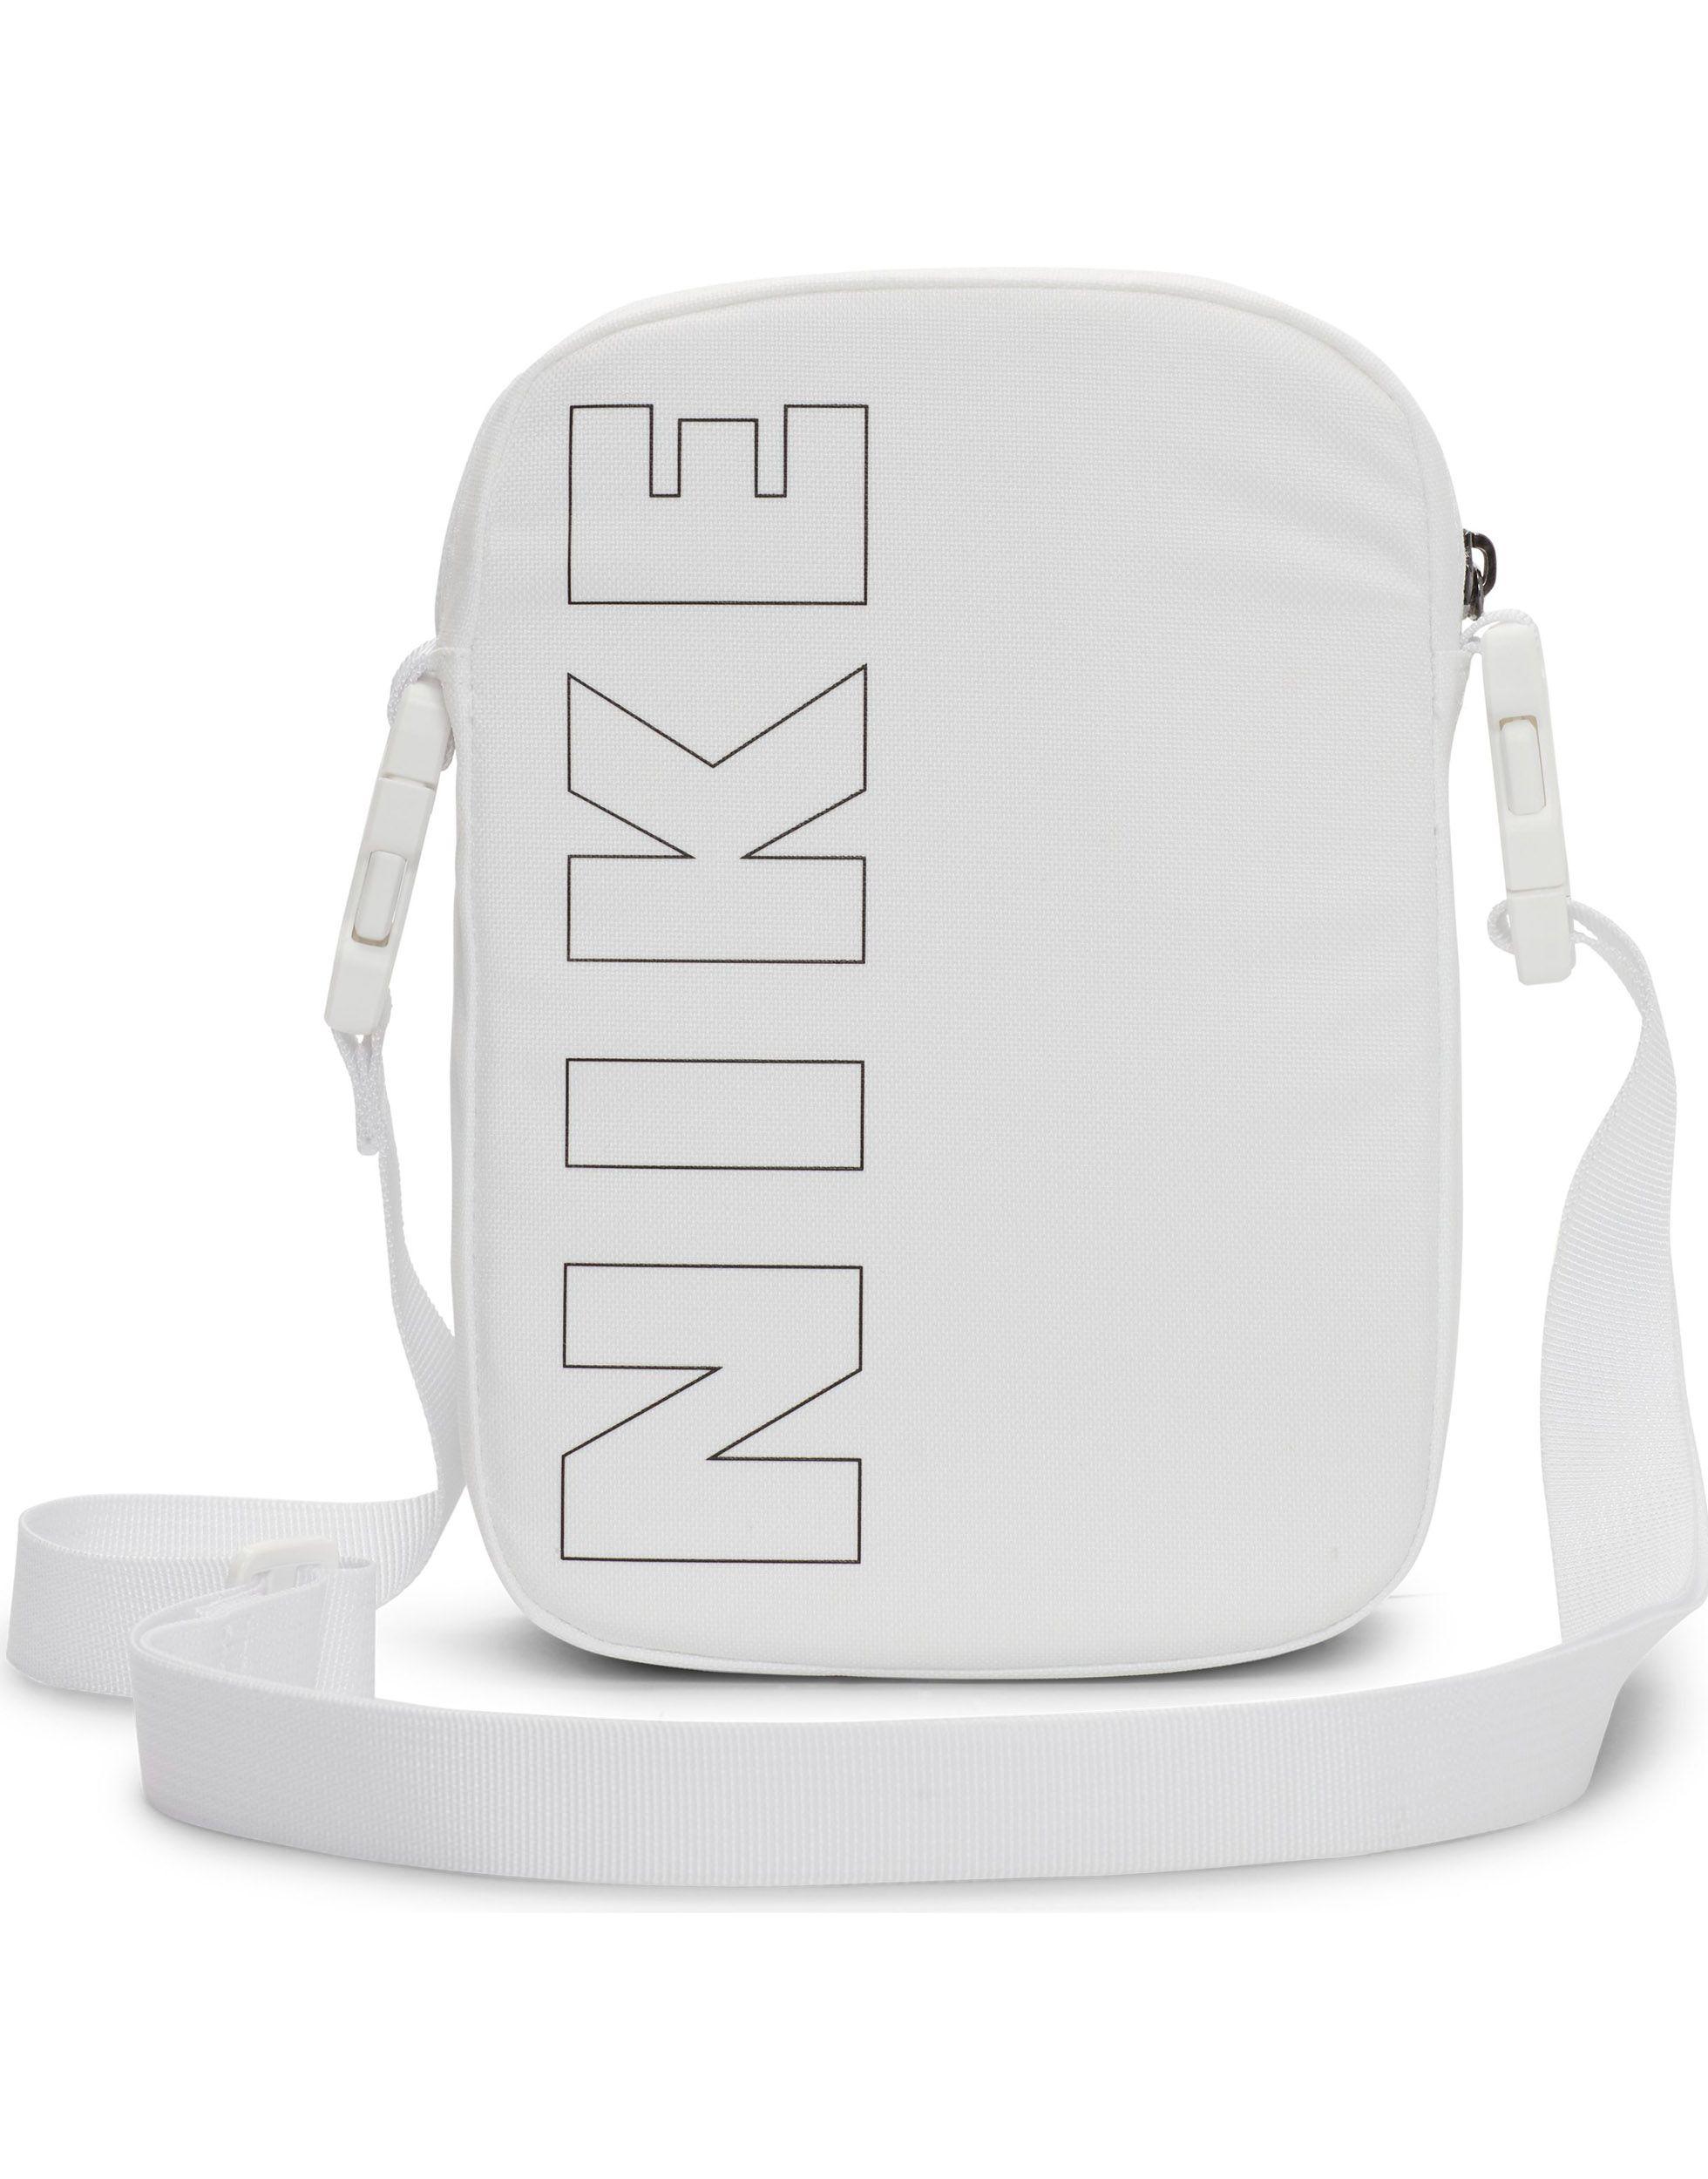 Nike Air Heritage Flight Bag in White for Men - Lyst